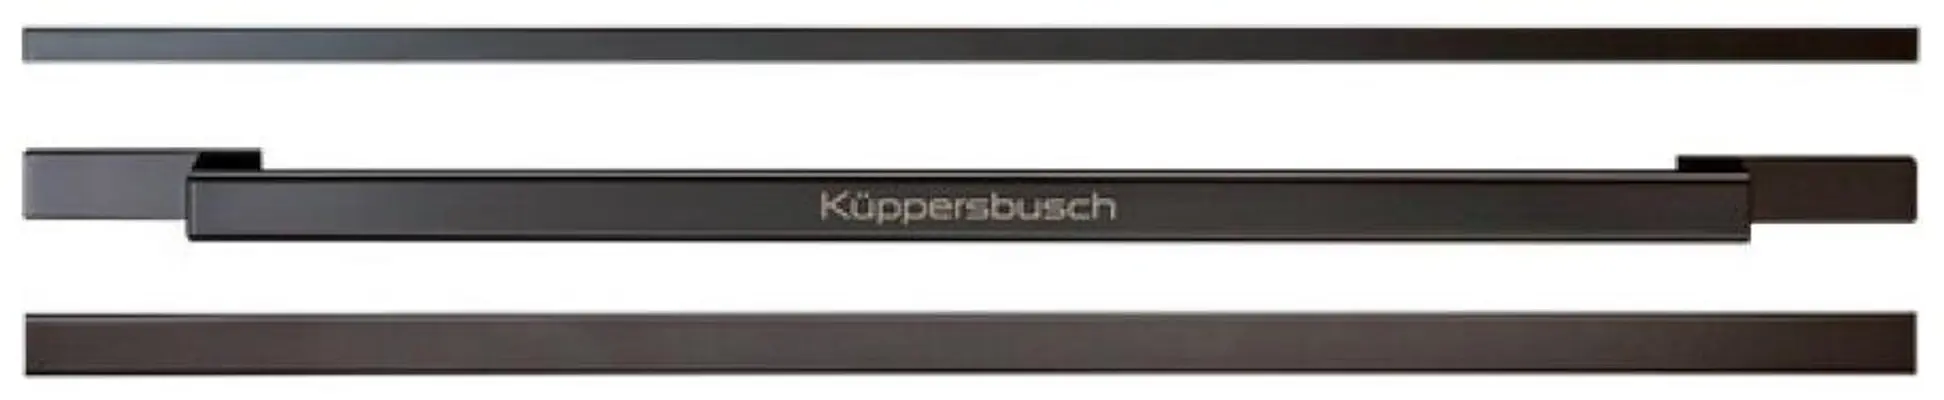 DK2003-Kuppersbusch-Koel-vries-accessoires